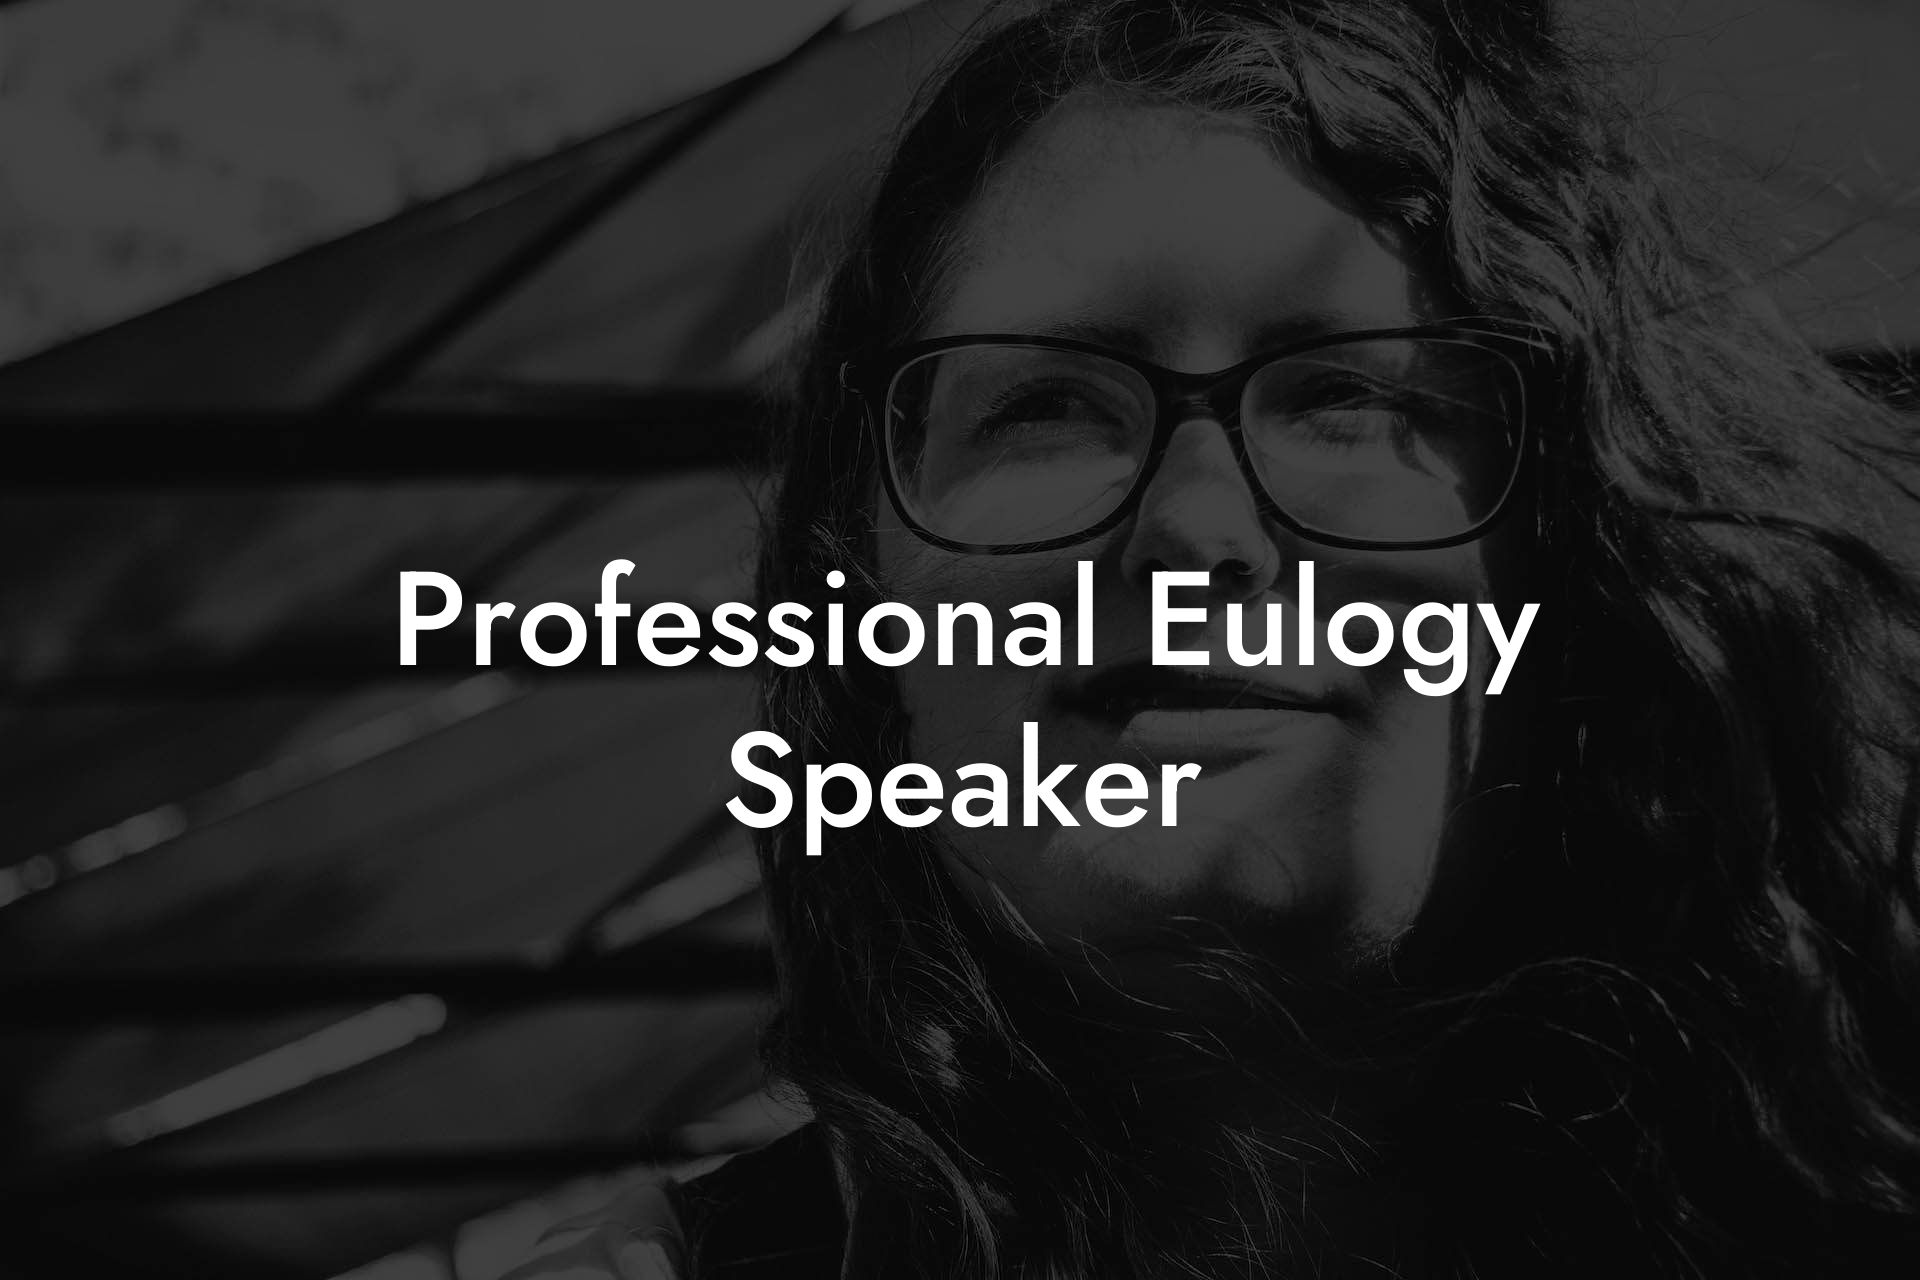 Professional Eulogy Speaker